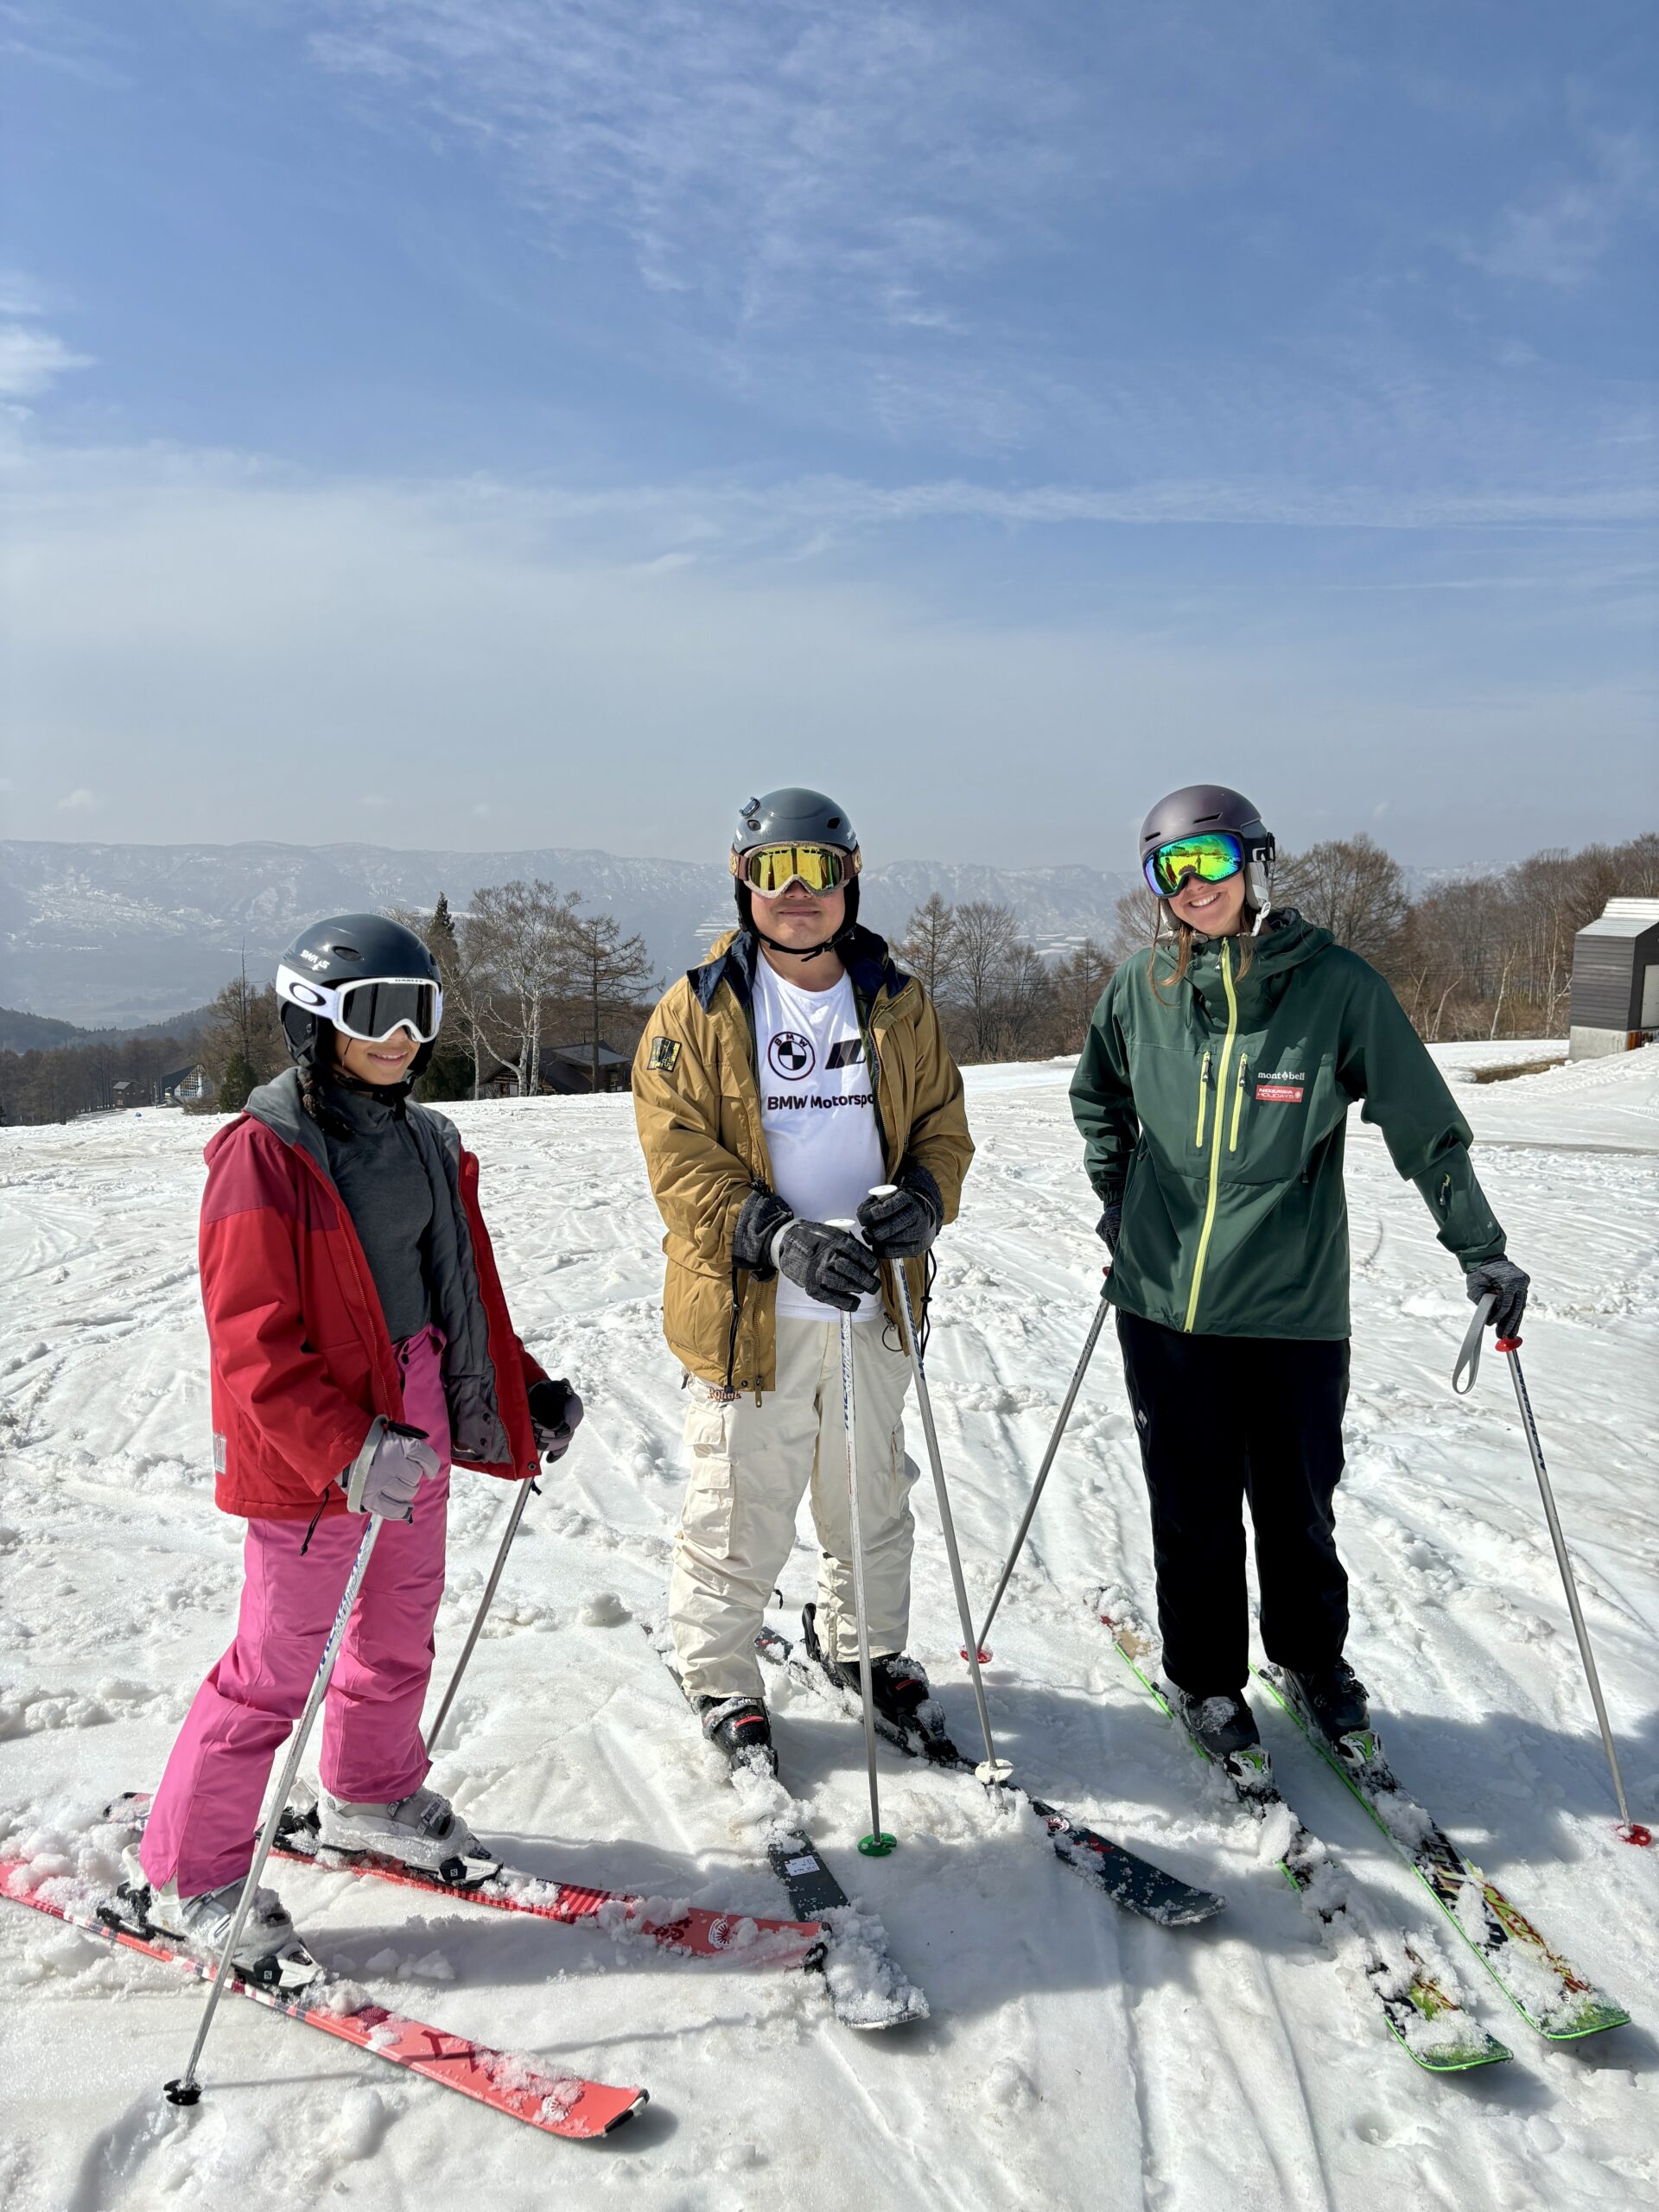 Nozawa Holidays instructor teaching keen skiers on Mt. Kenashi!